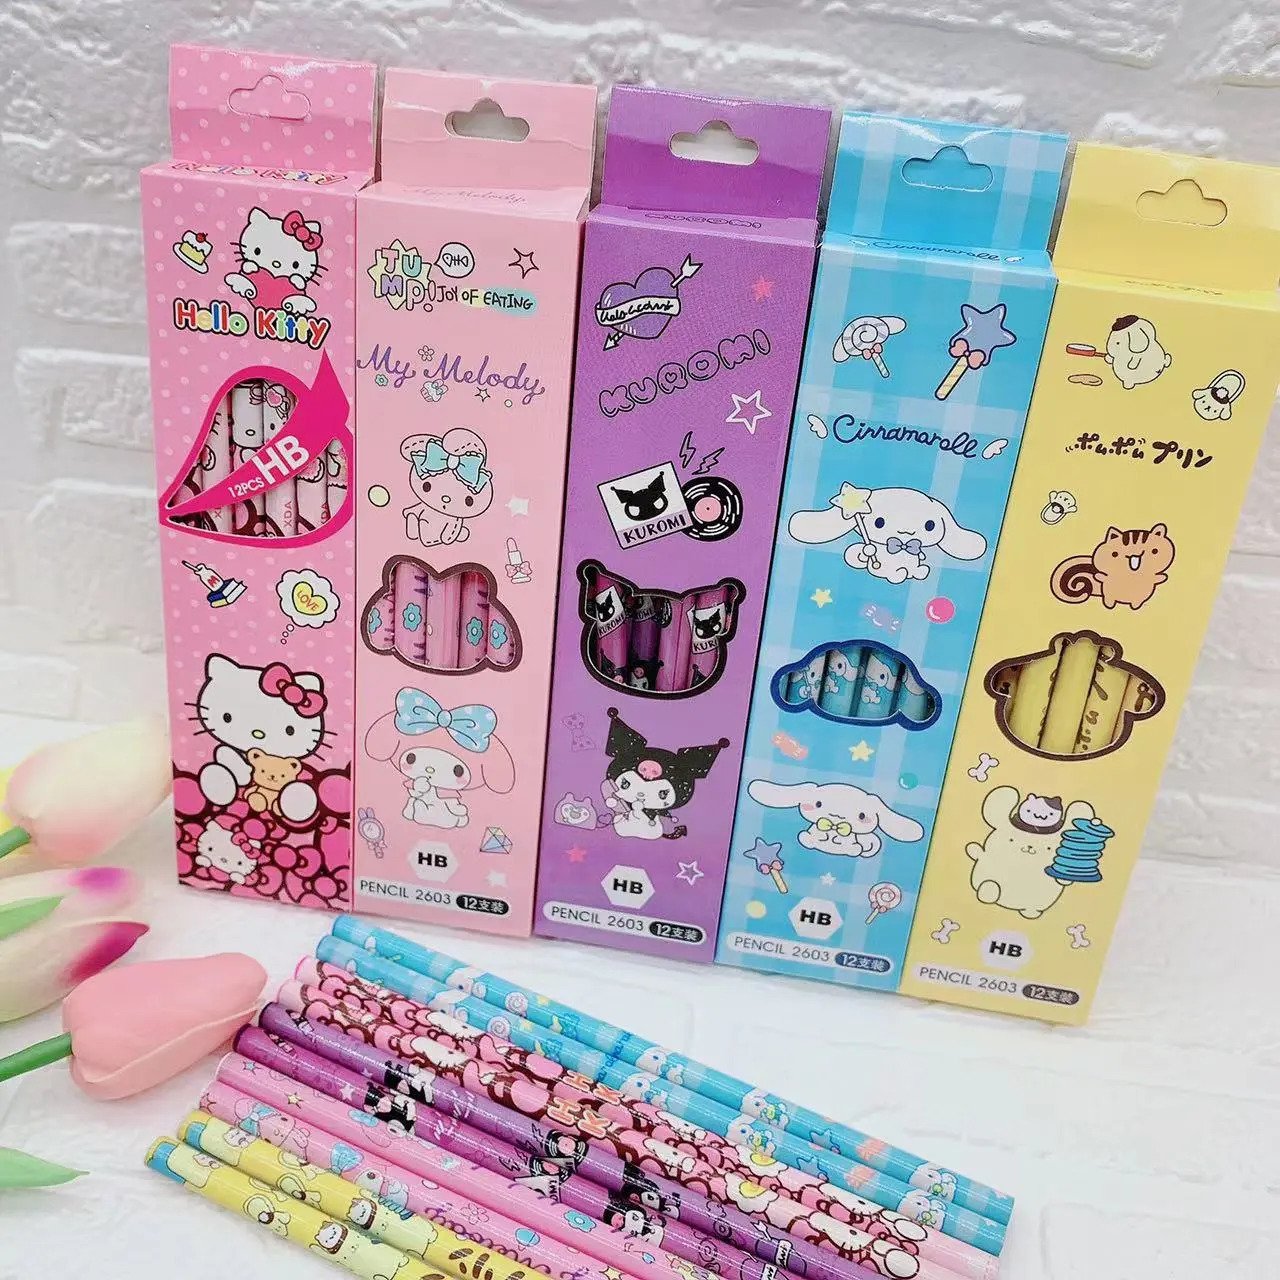 Sanrio Pencil Pack (qty: 12)